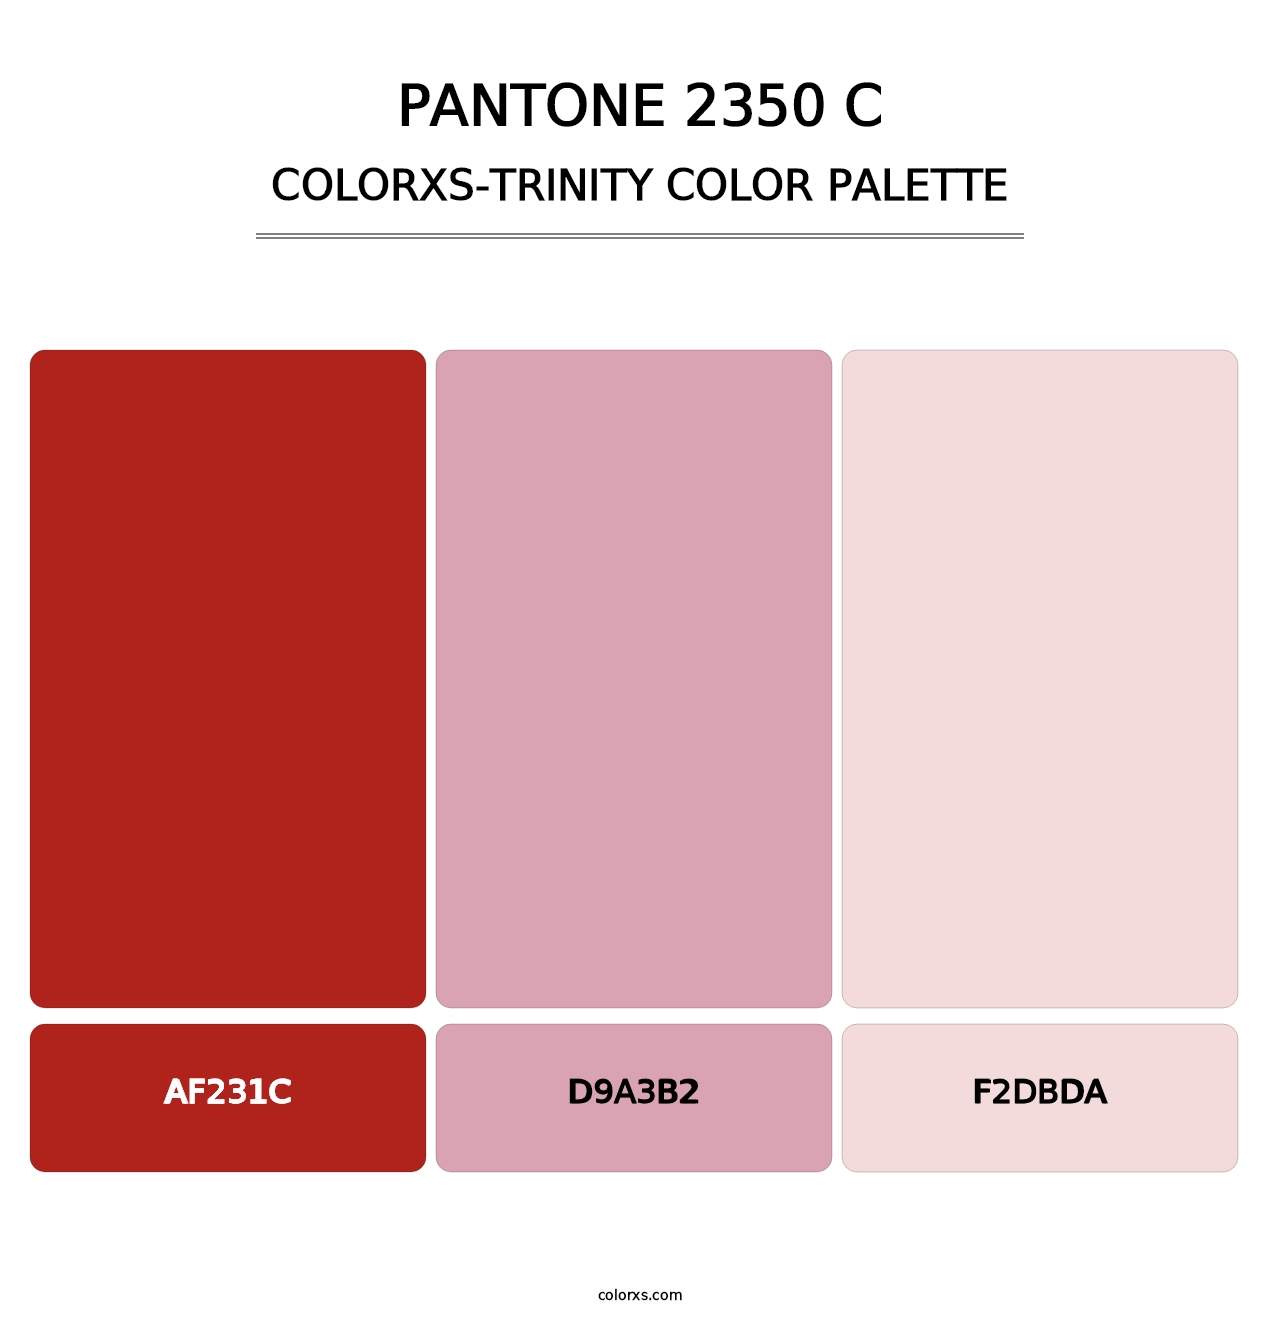 PANTONE 2350 C - Colorxs Trinity Palette